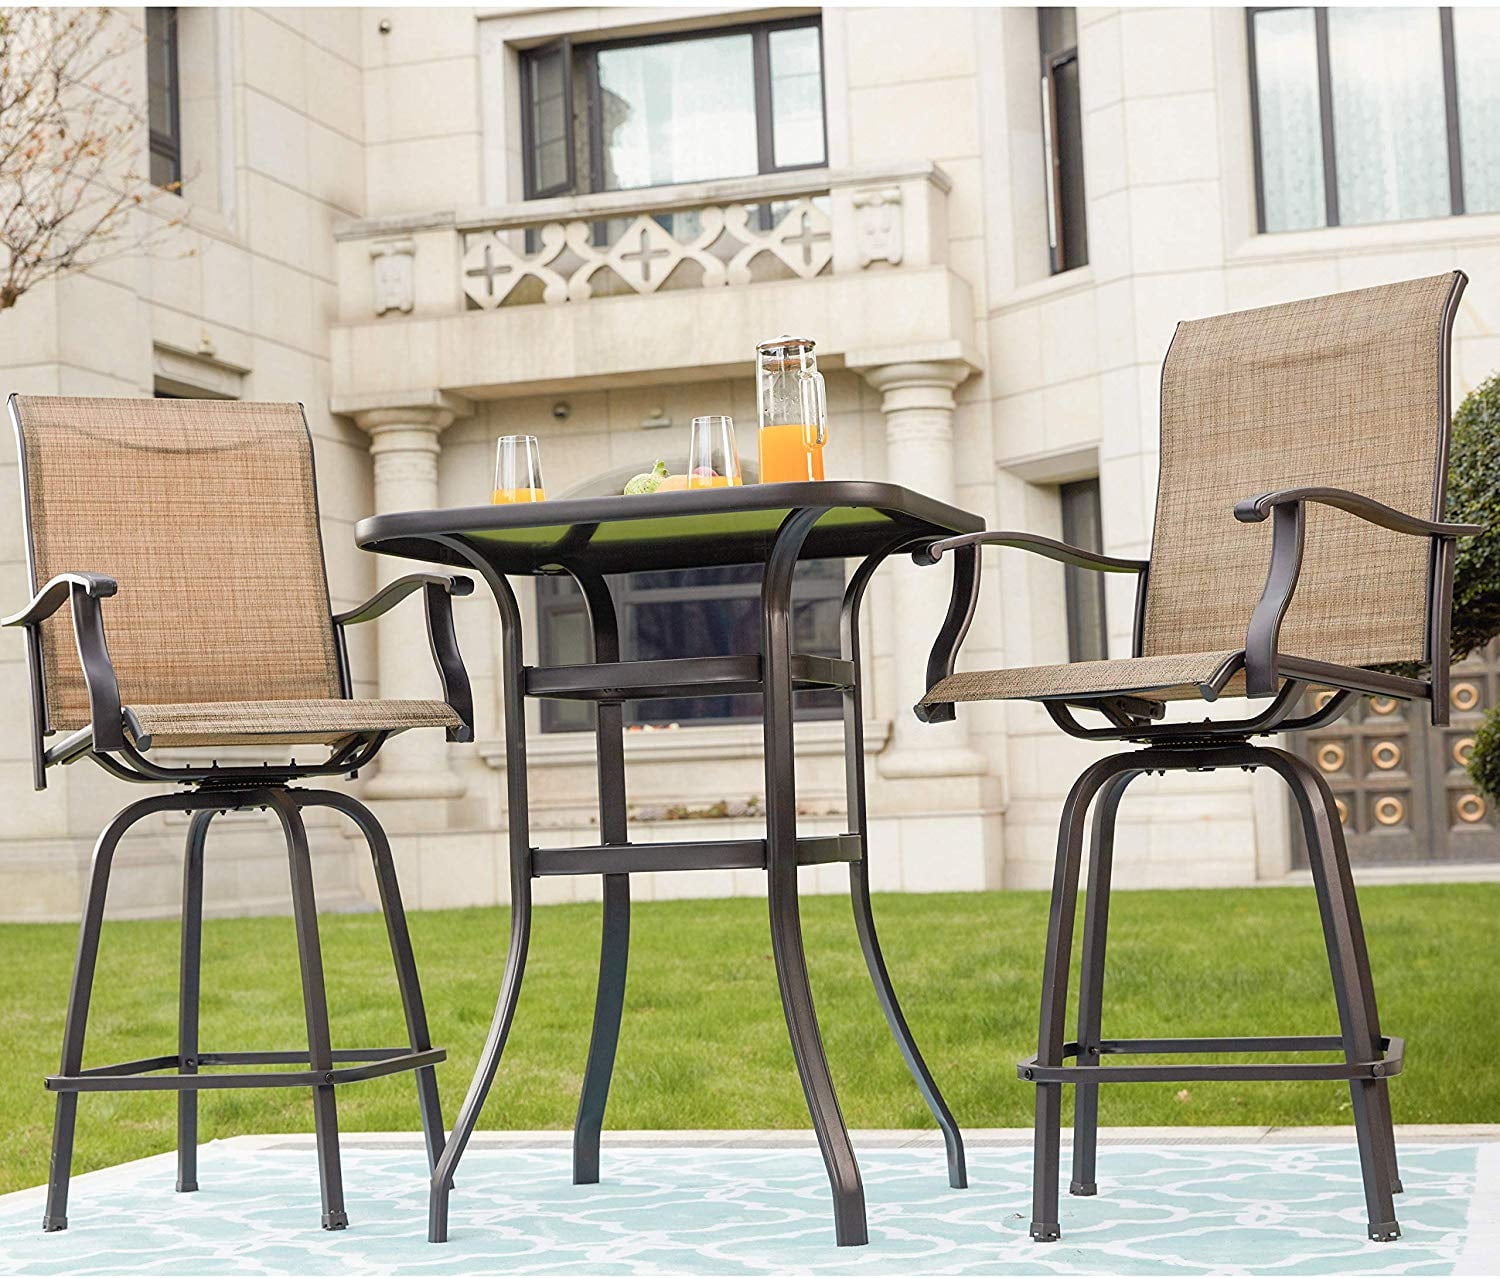 Outdoor Bistro Table Sets / 3pcs Outdoor Patio Furniture Cast Aluminum